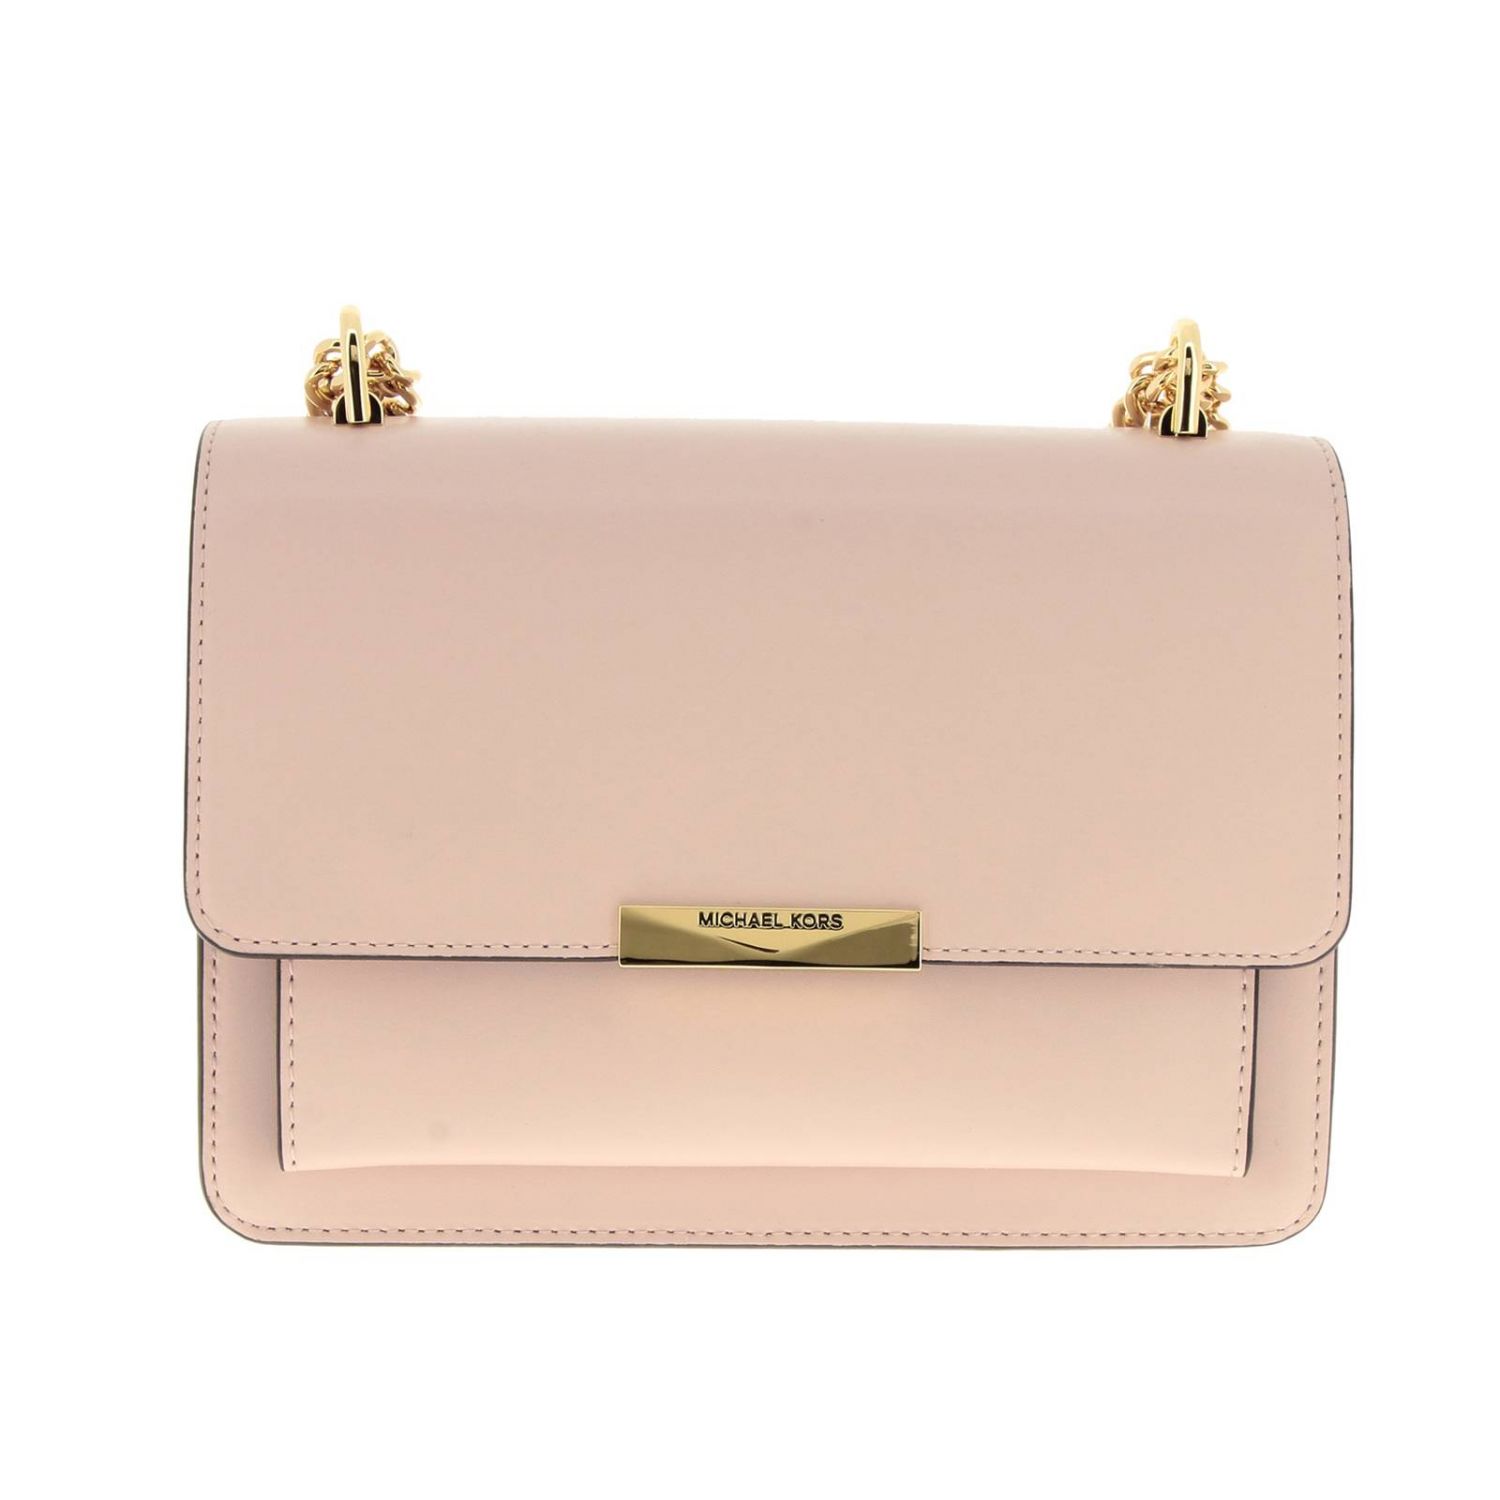 Michael Kors Outlet: mini bag for woman - Blush Pink | Michael Kors ...